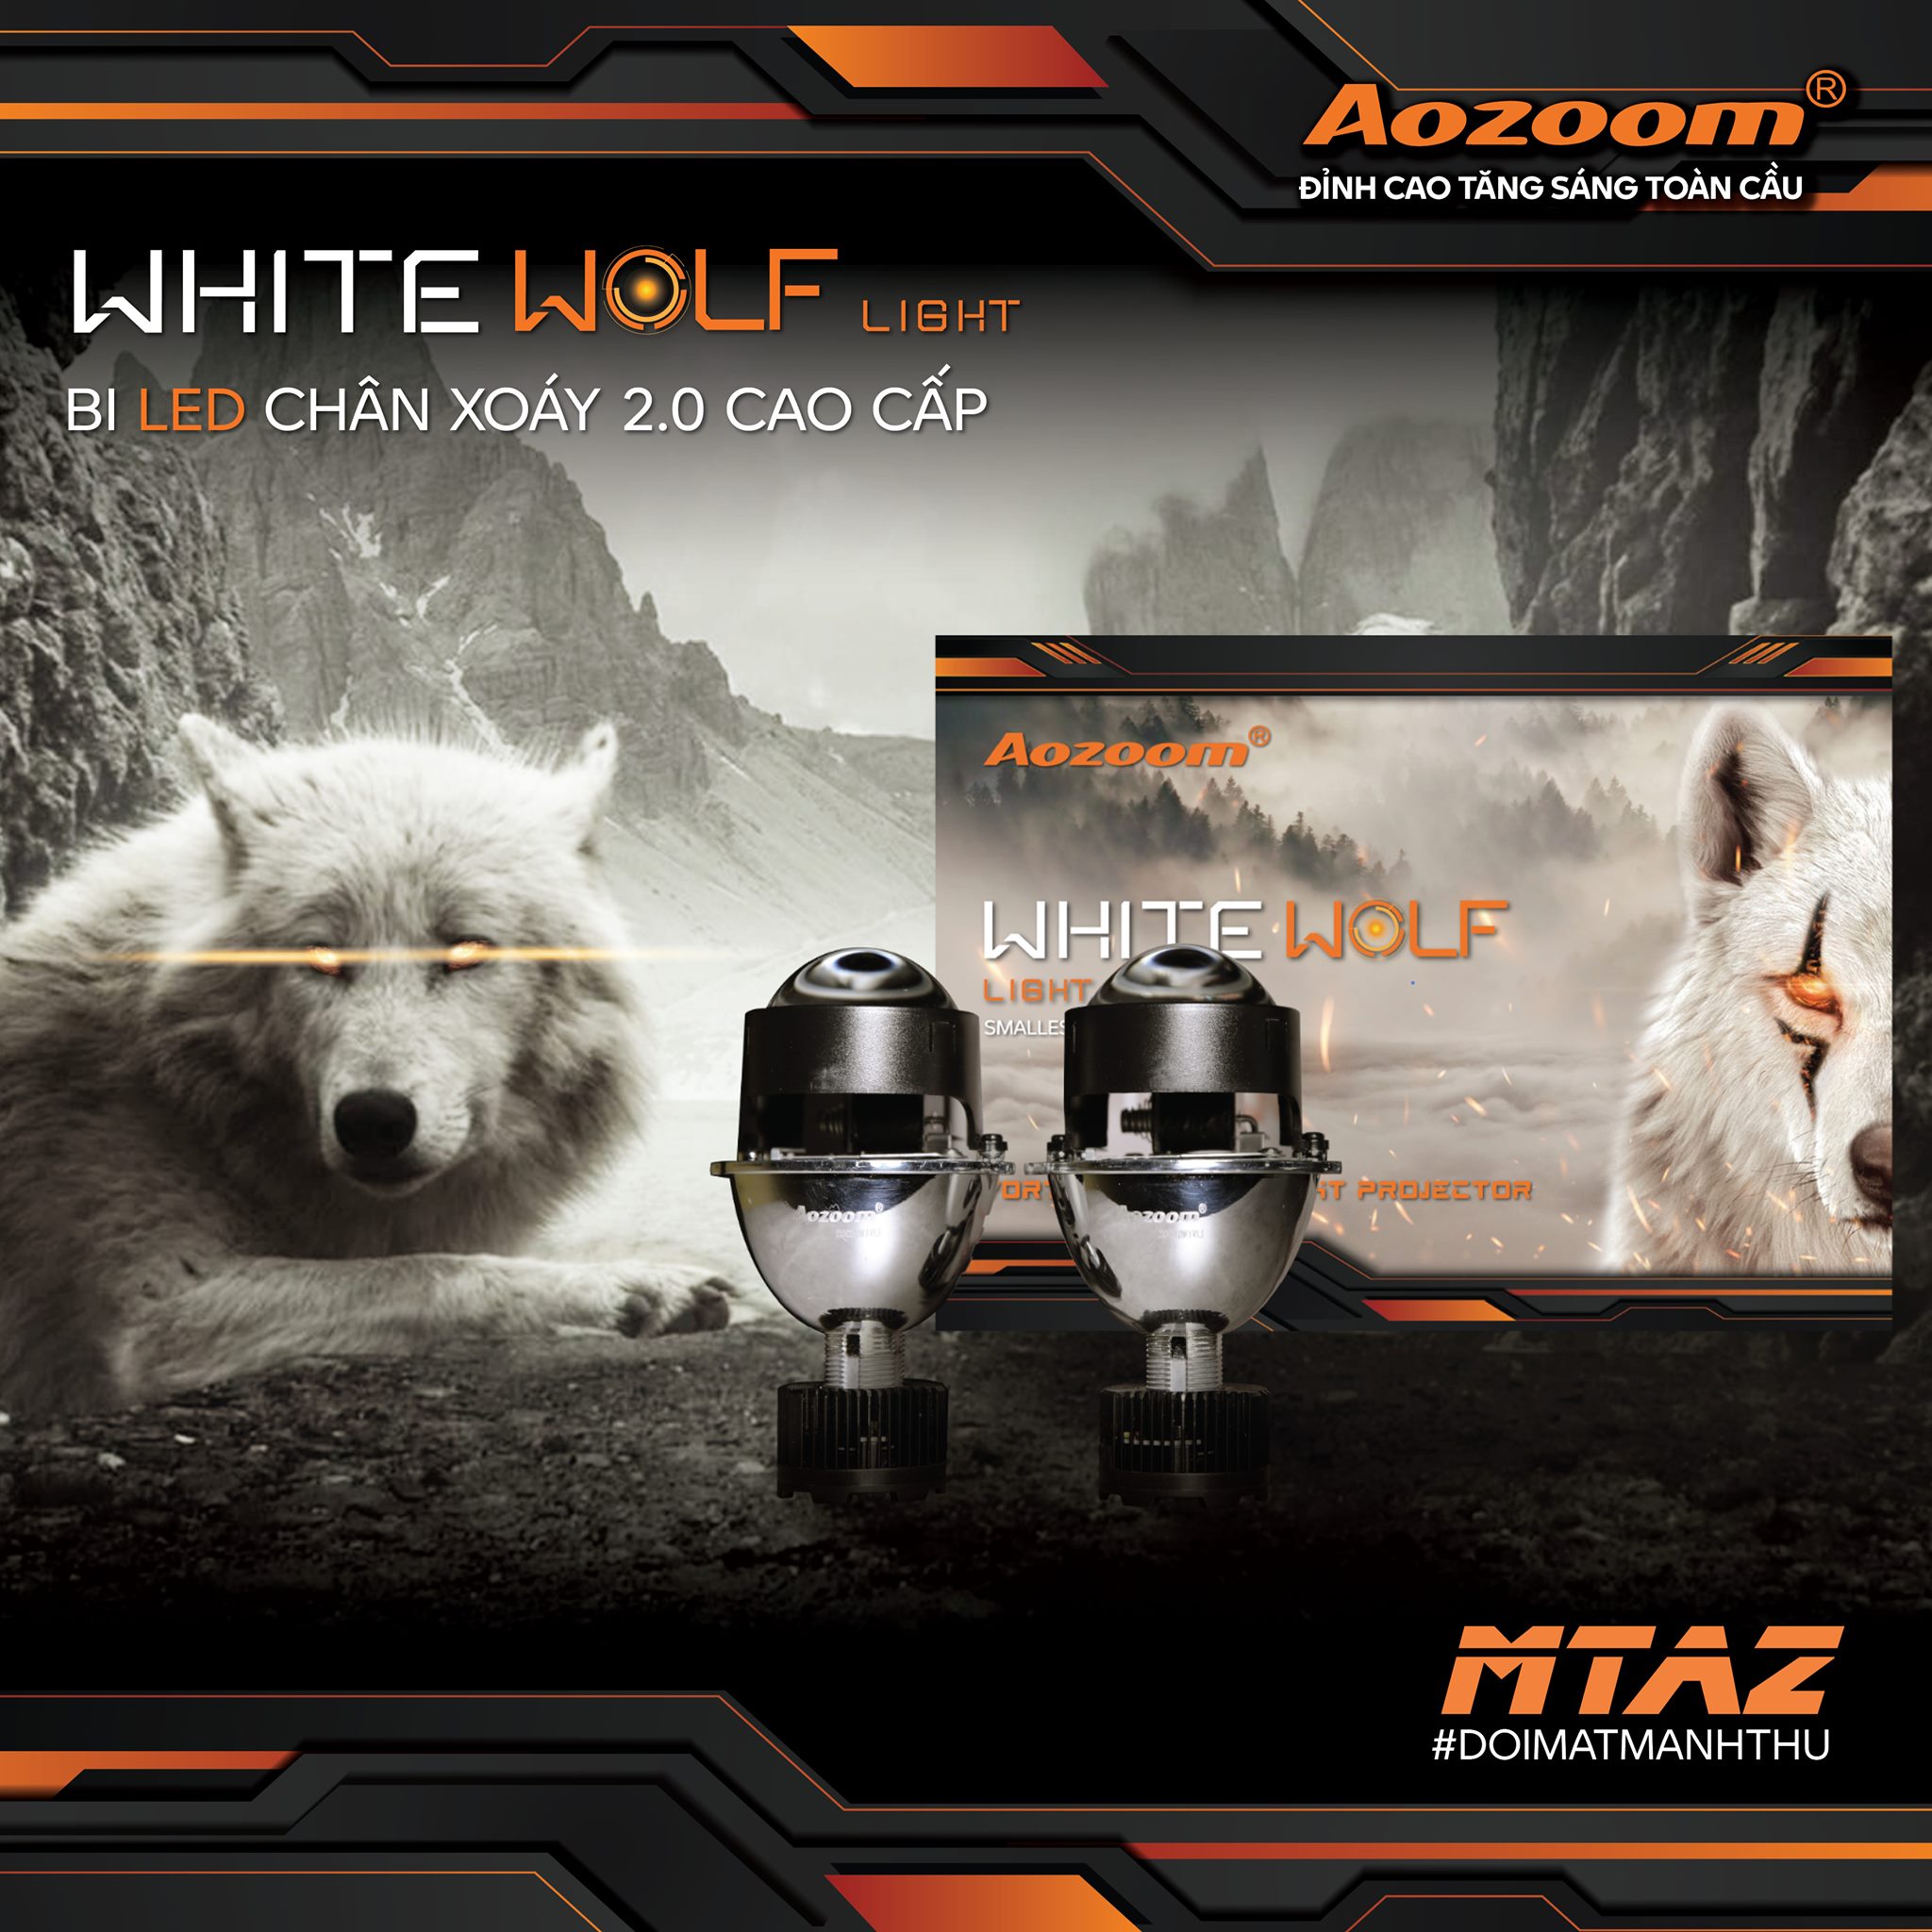 Đèn Bi Led Aozoom White Wolf Light - 2.0 inch